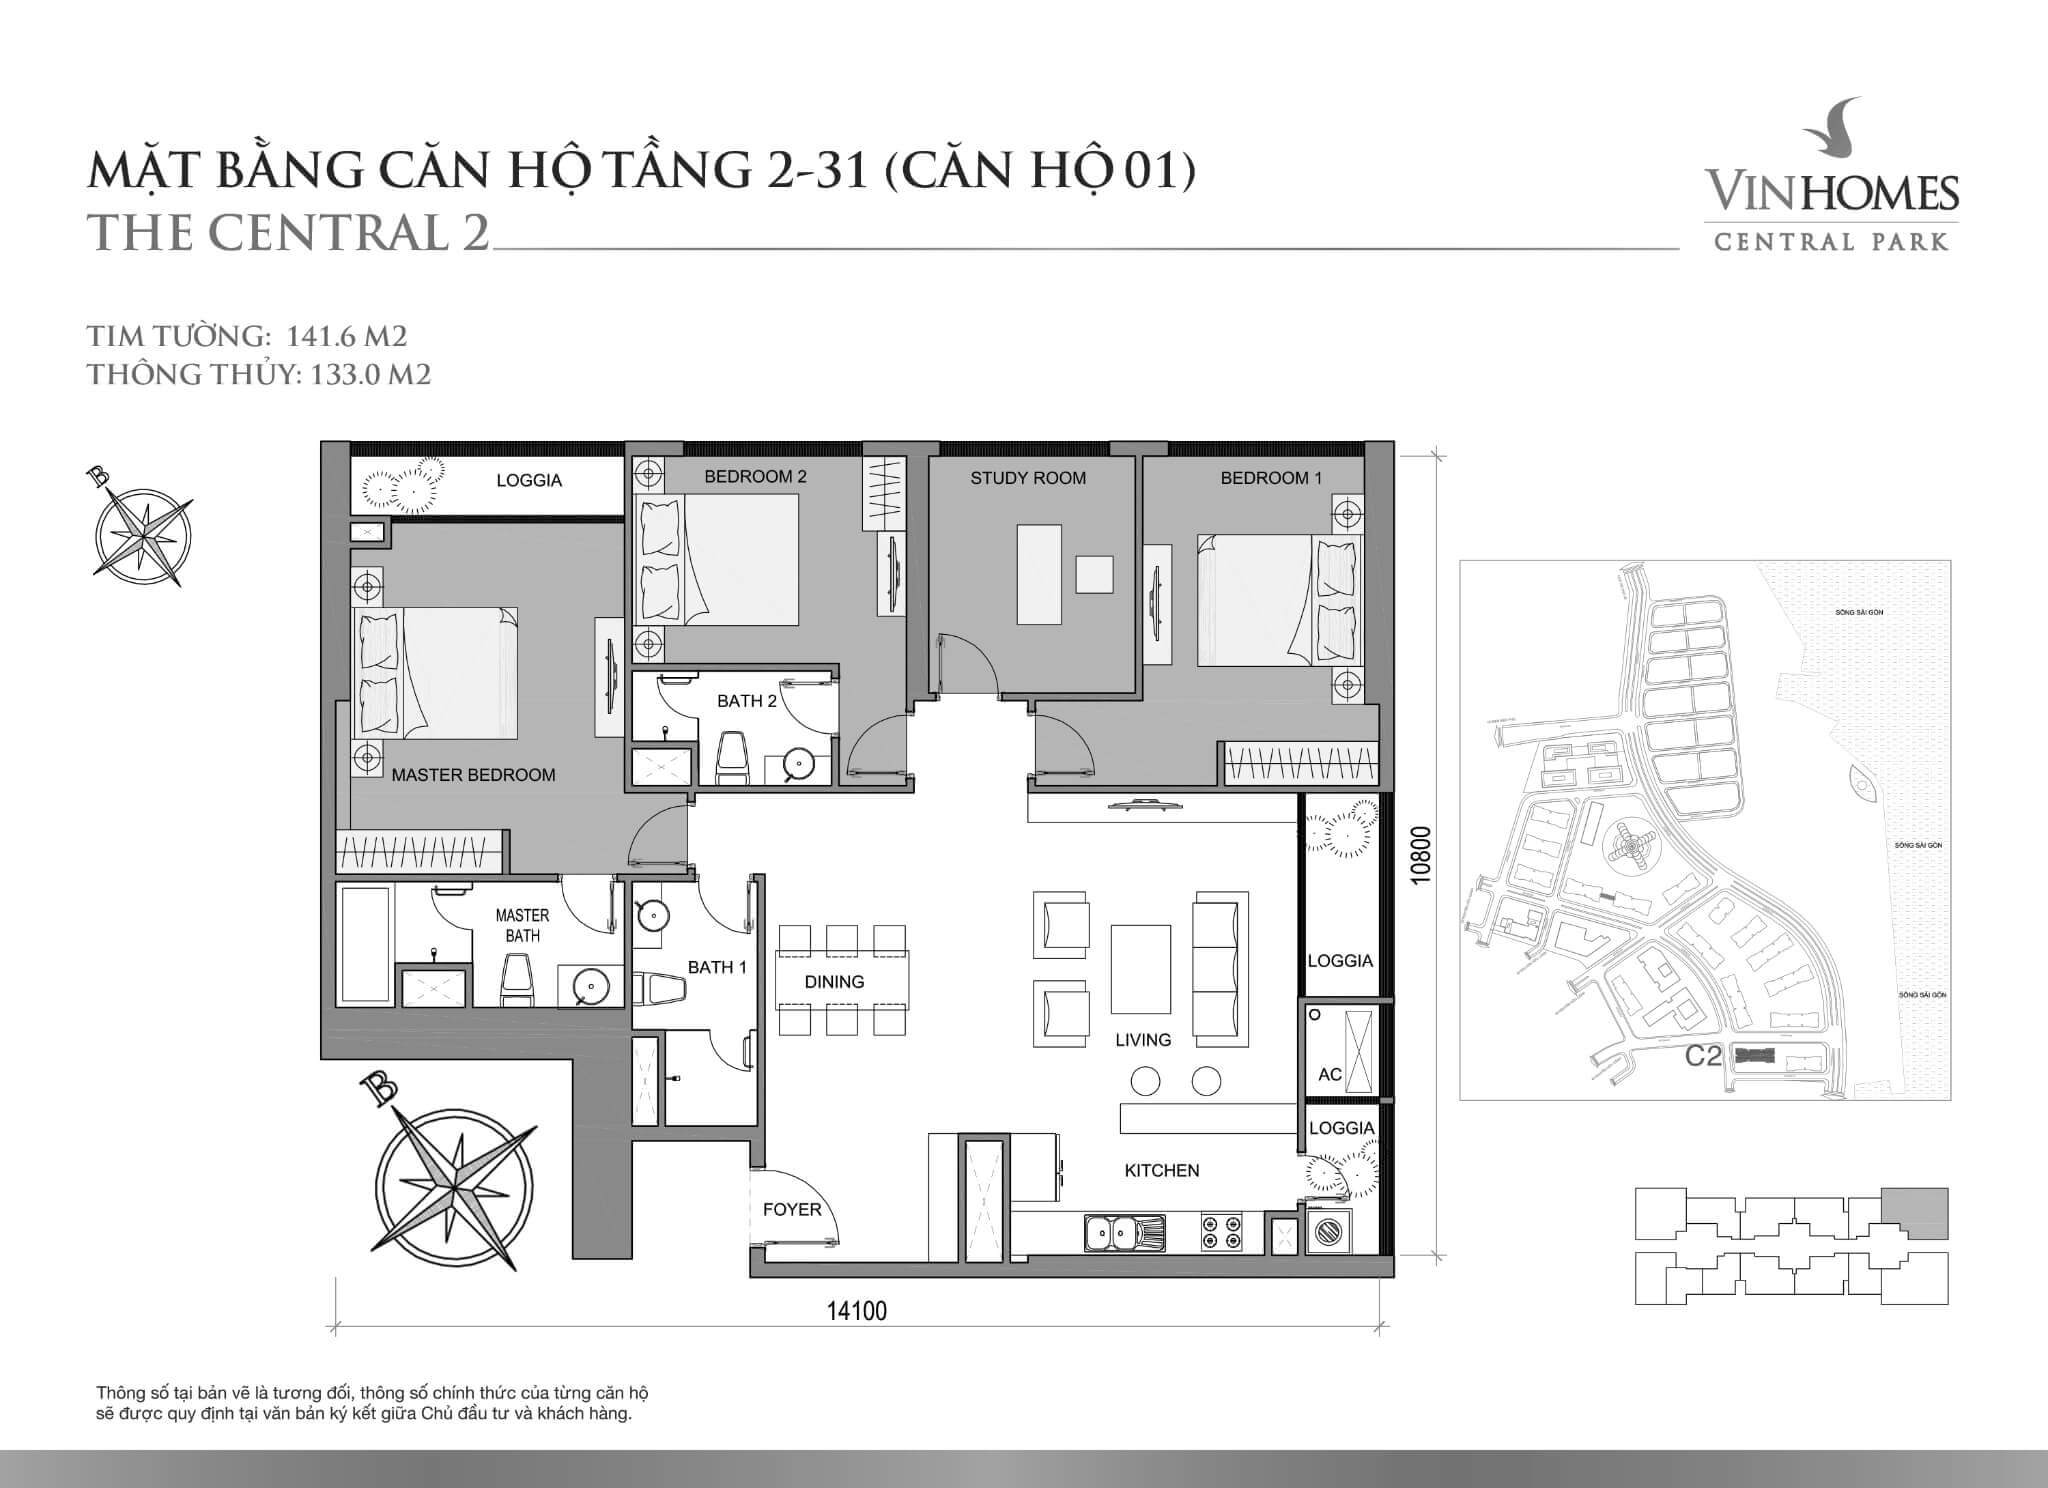 layout căn hộ số 1 C2-01 tầng 2-31